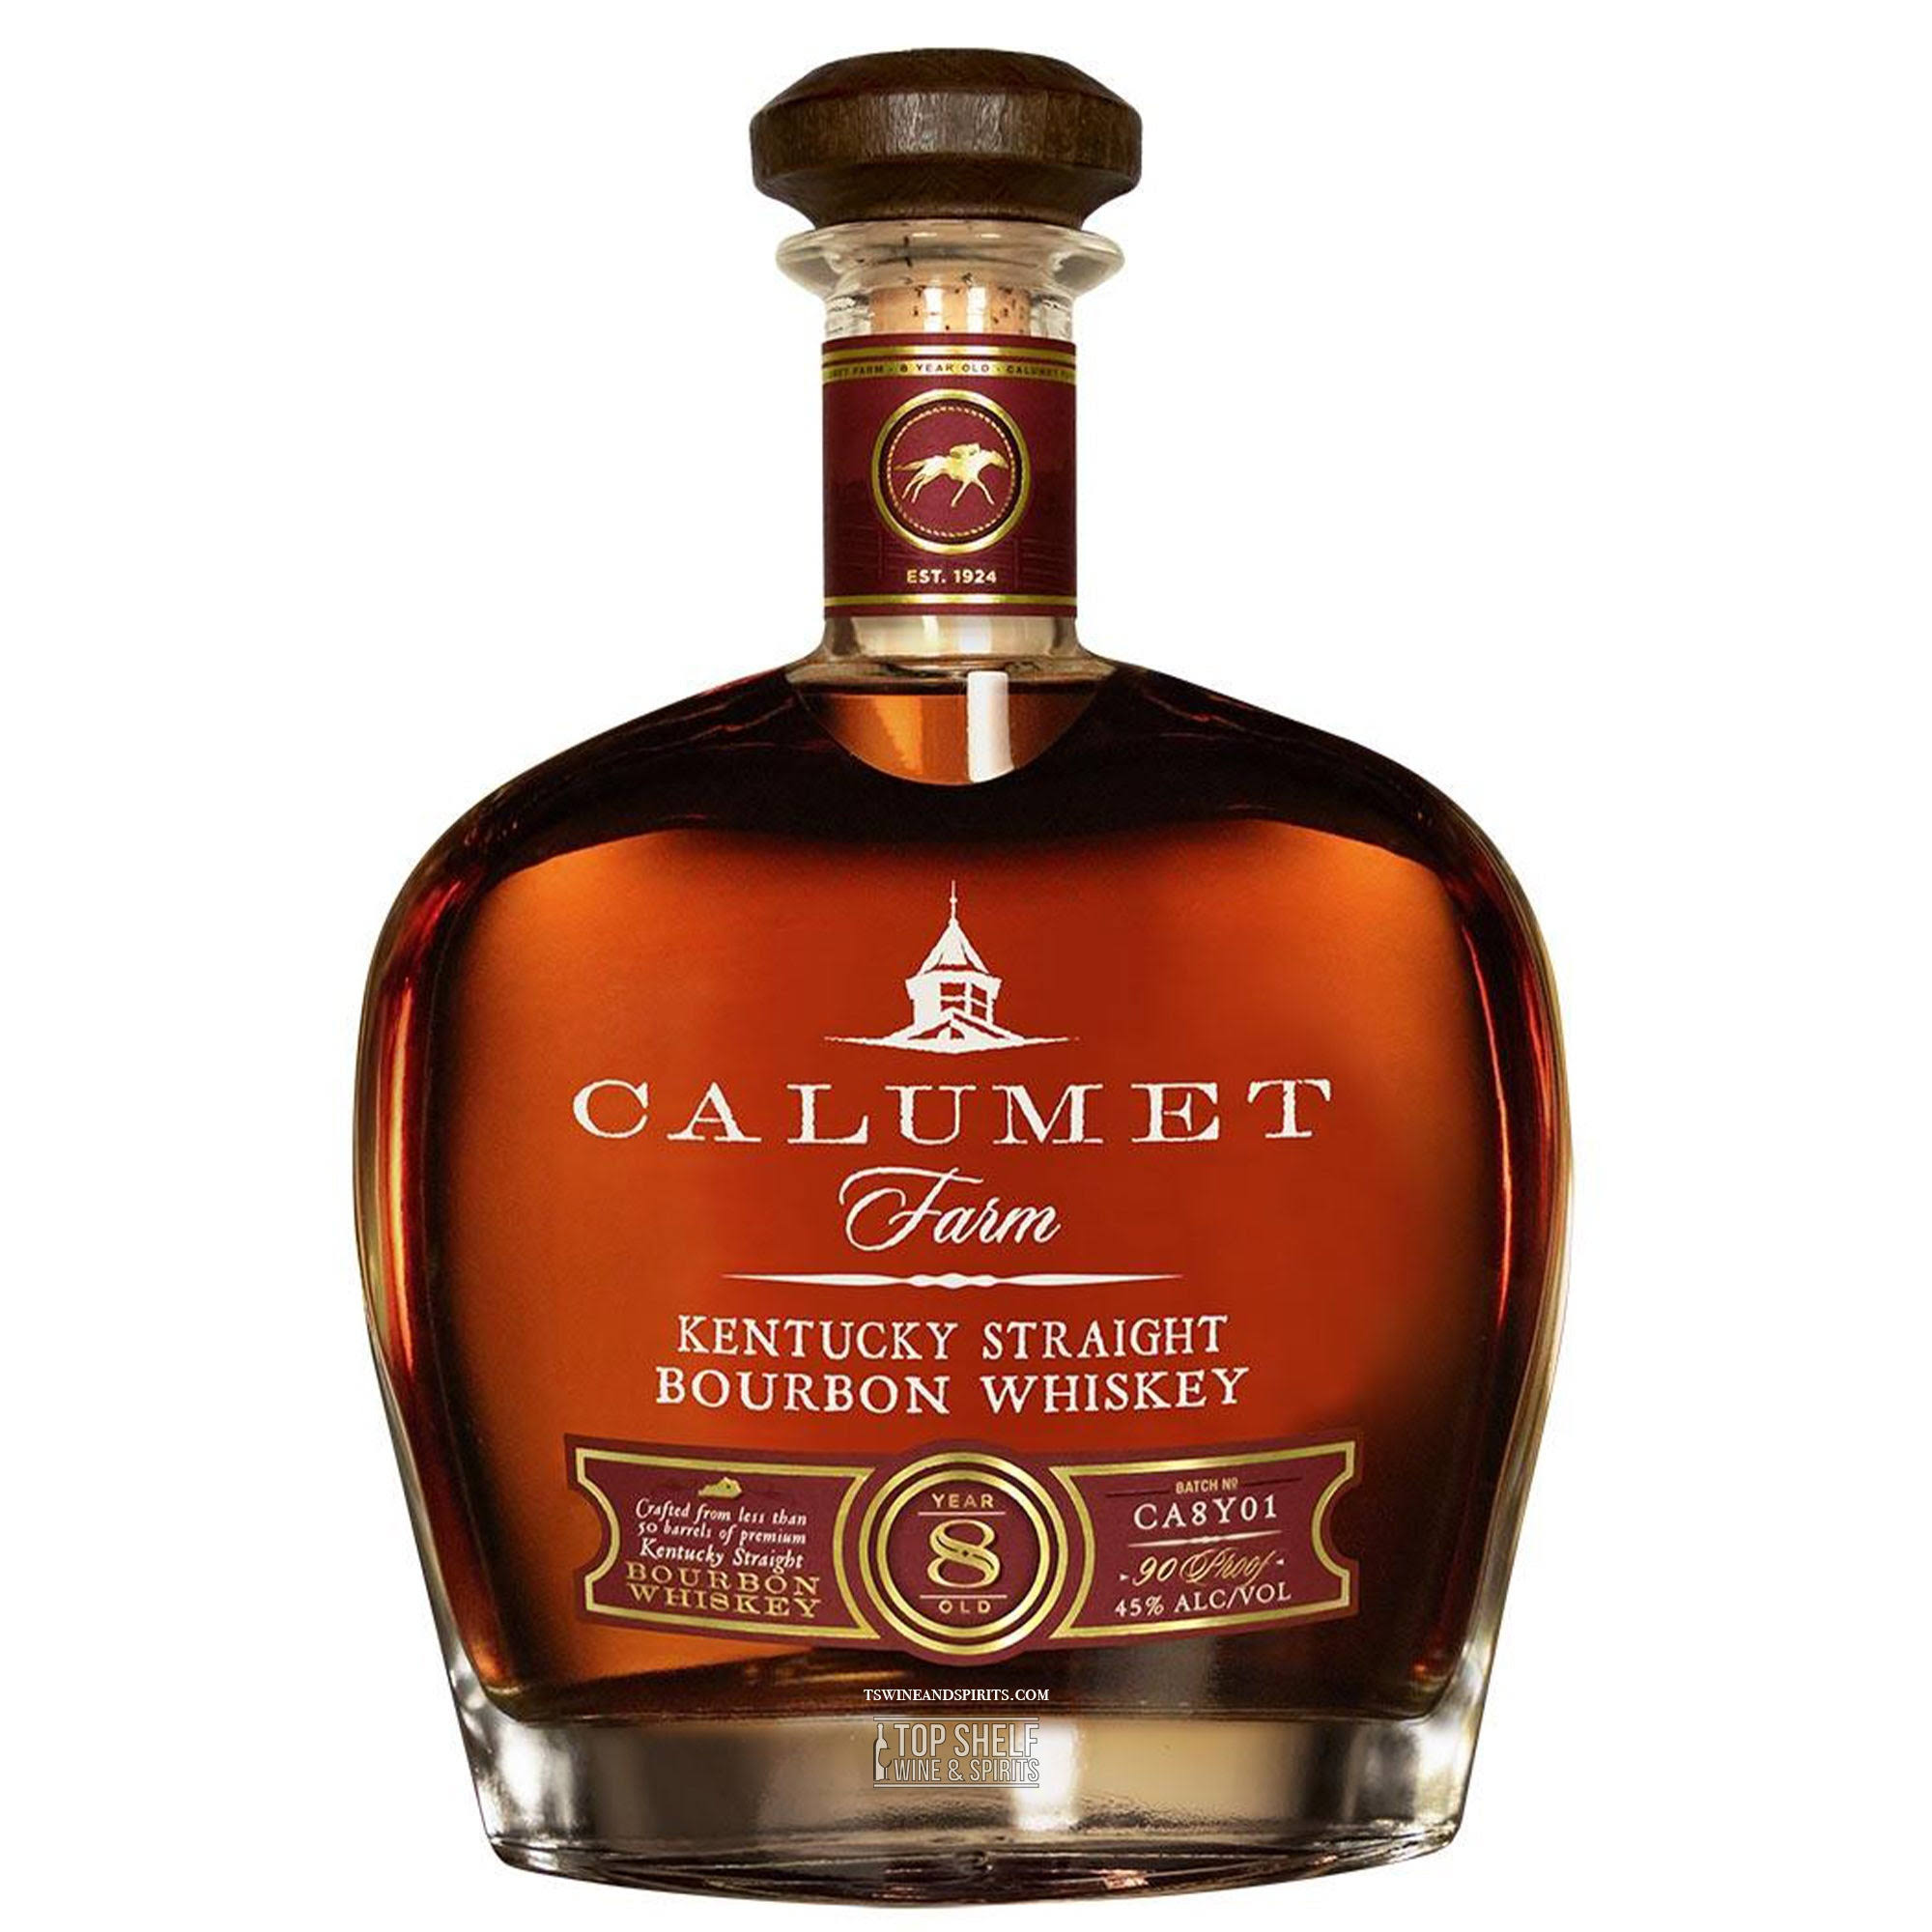 Calumet Farm Bourbon Whiskey, Kentucky Straight - 750 ml